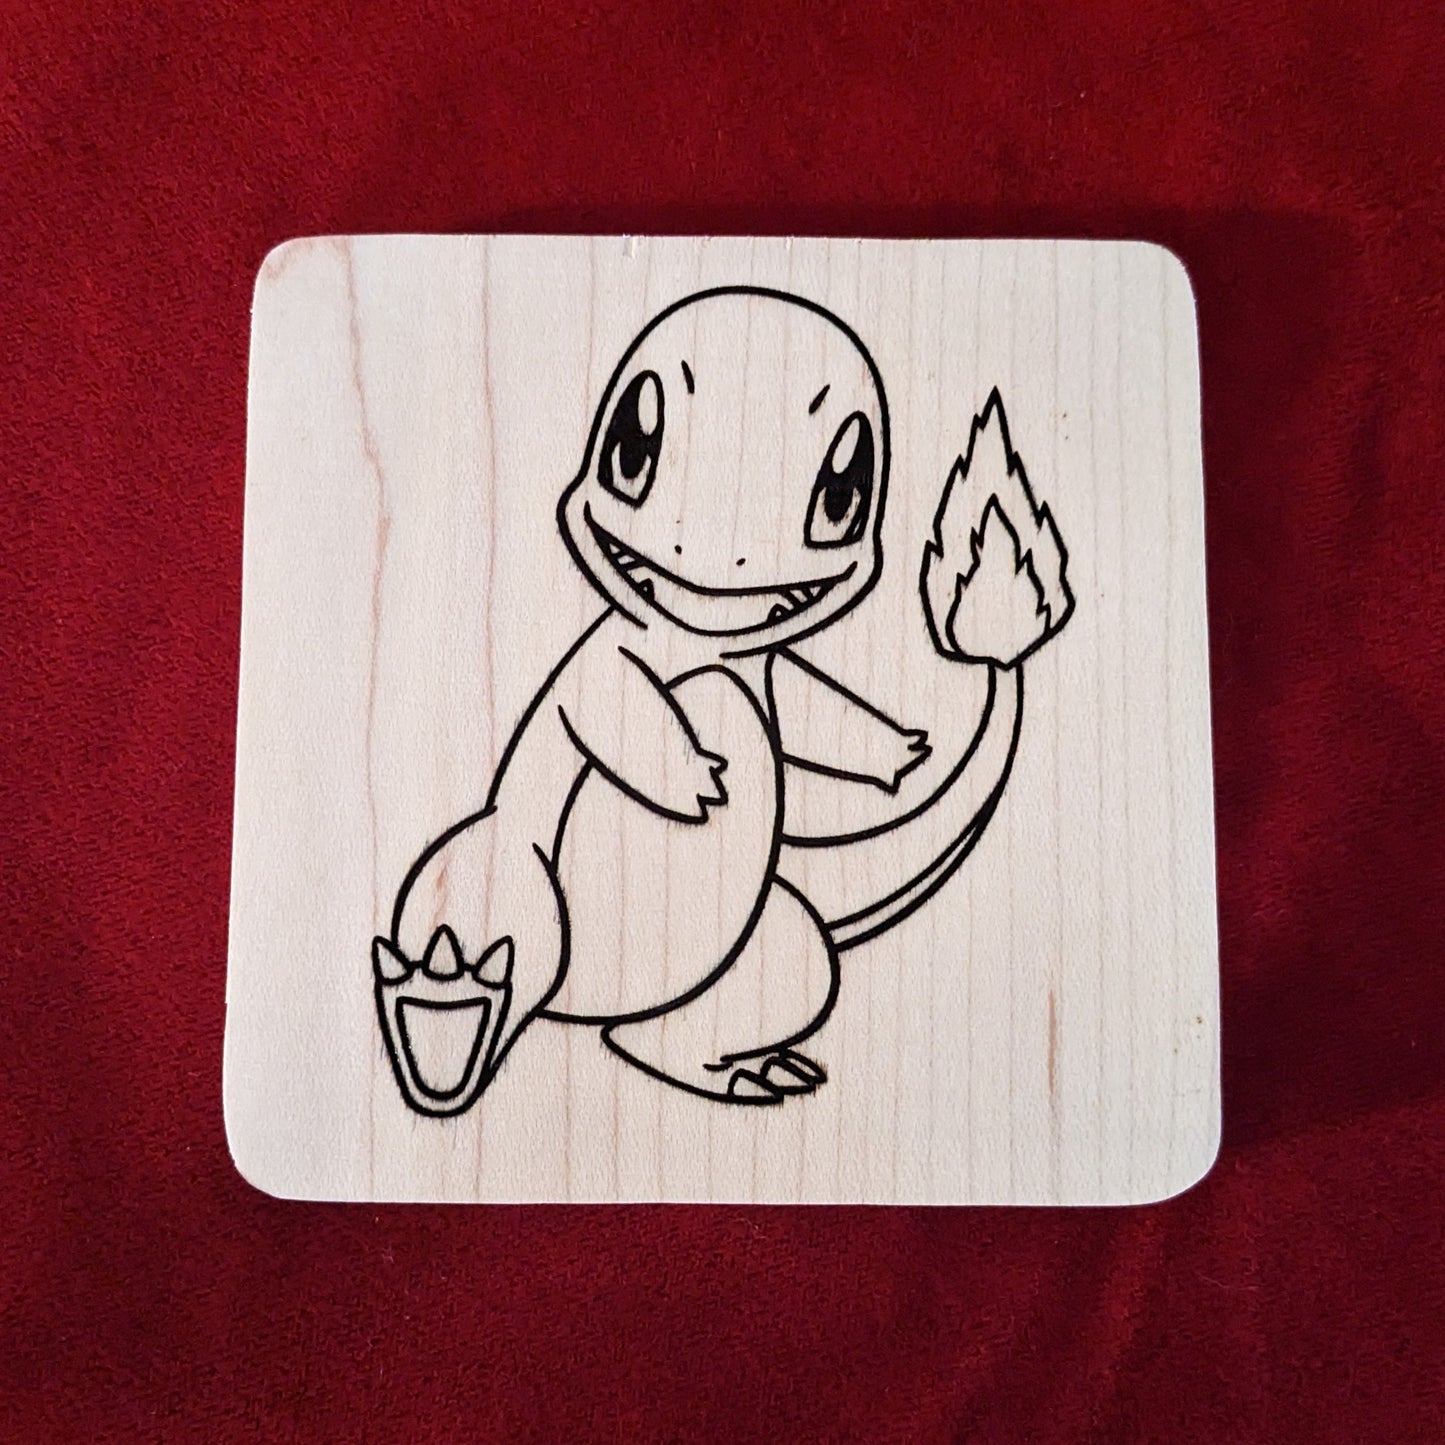 Pokemon Charmander Coaster